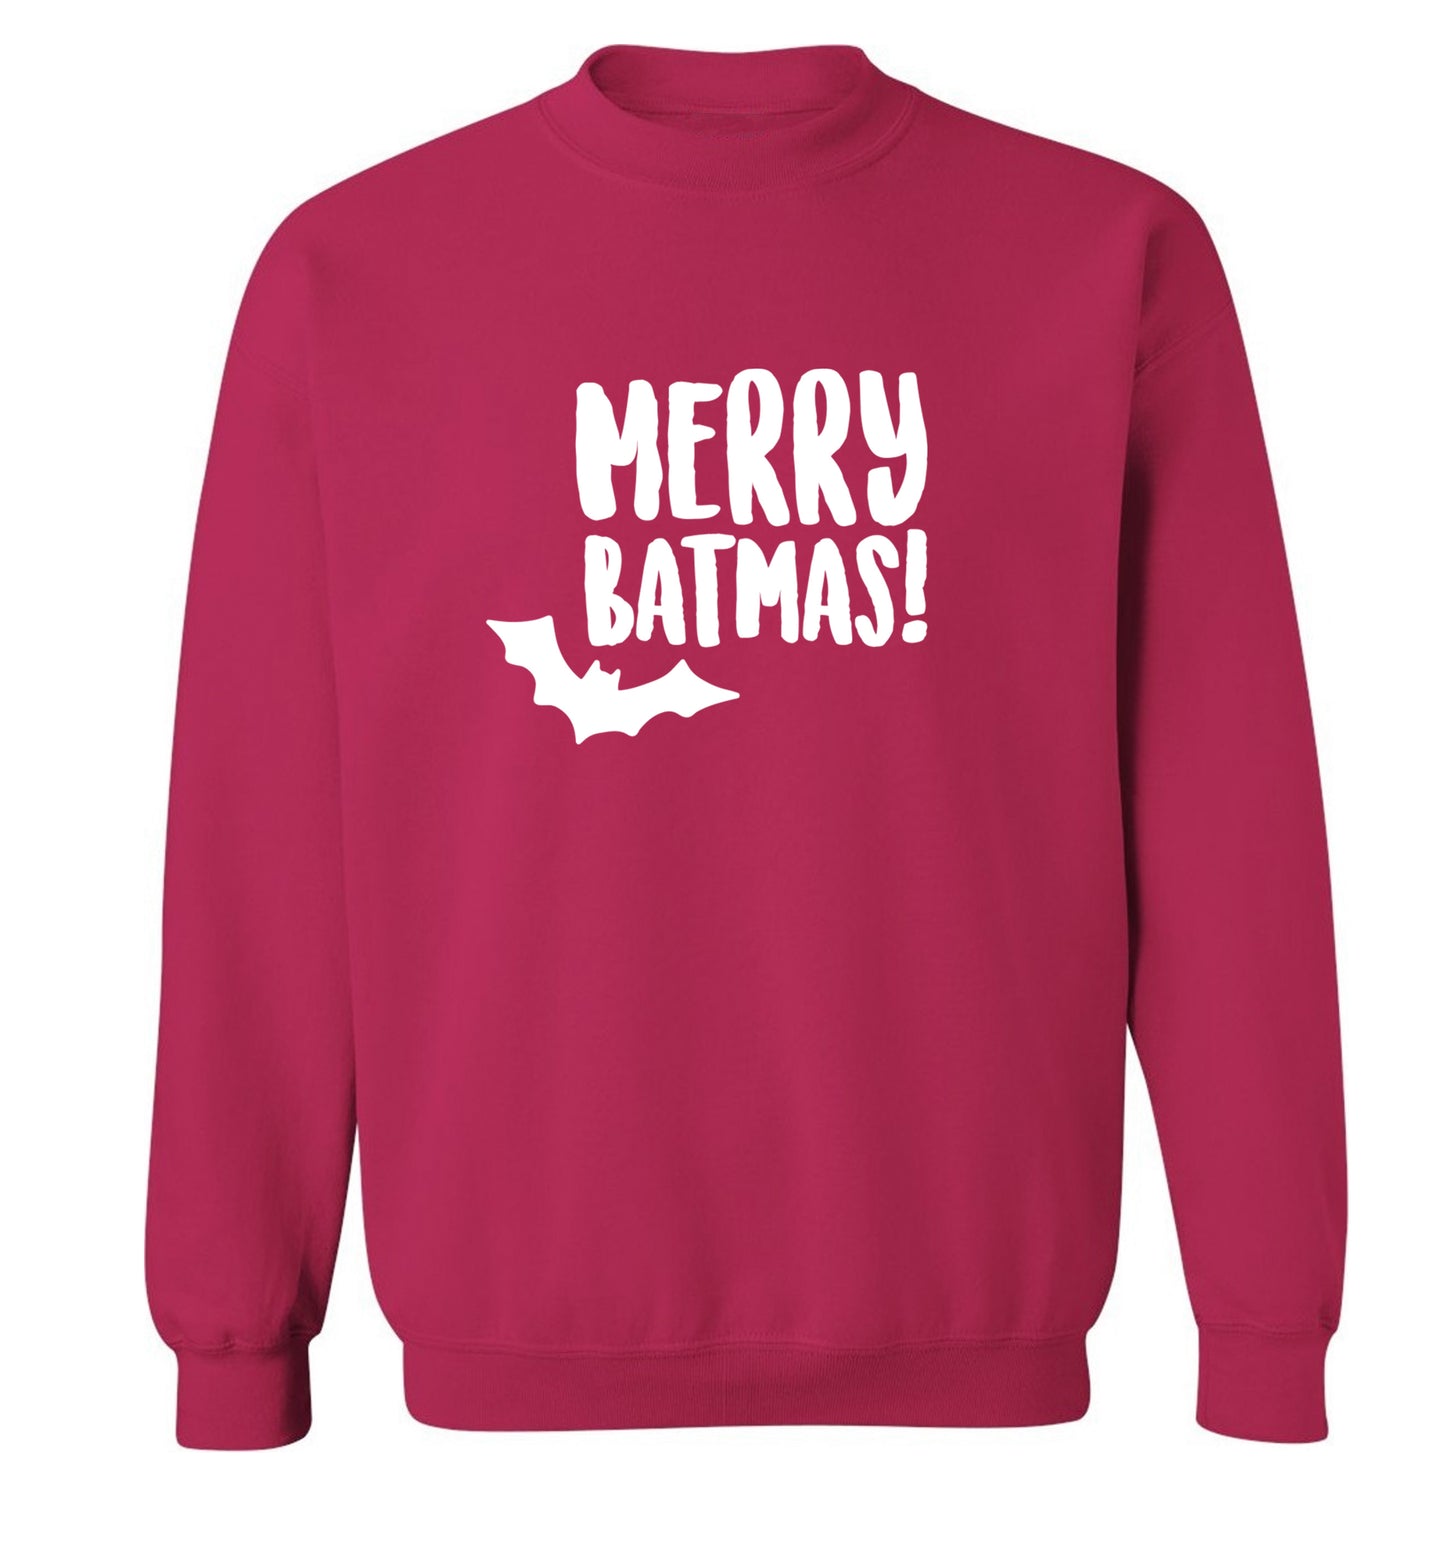 Merry Batmas Adult's unisex pink Sweater 2XL